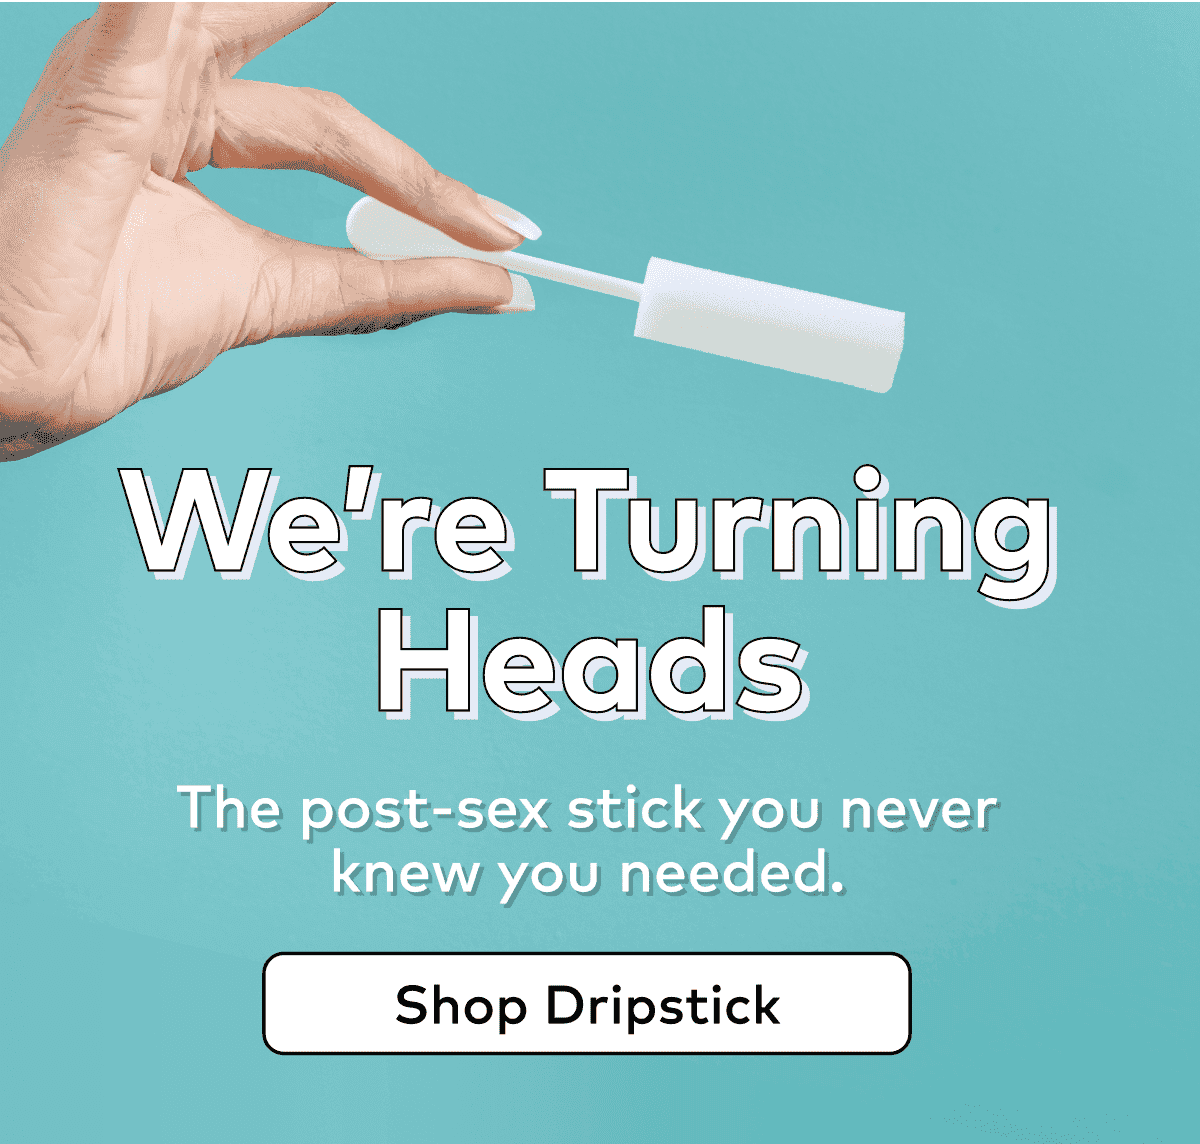 Shop Dripstick